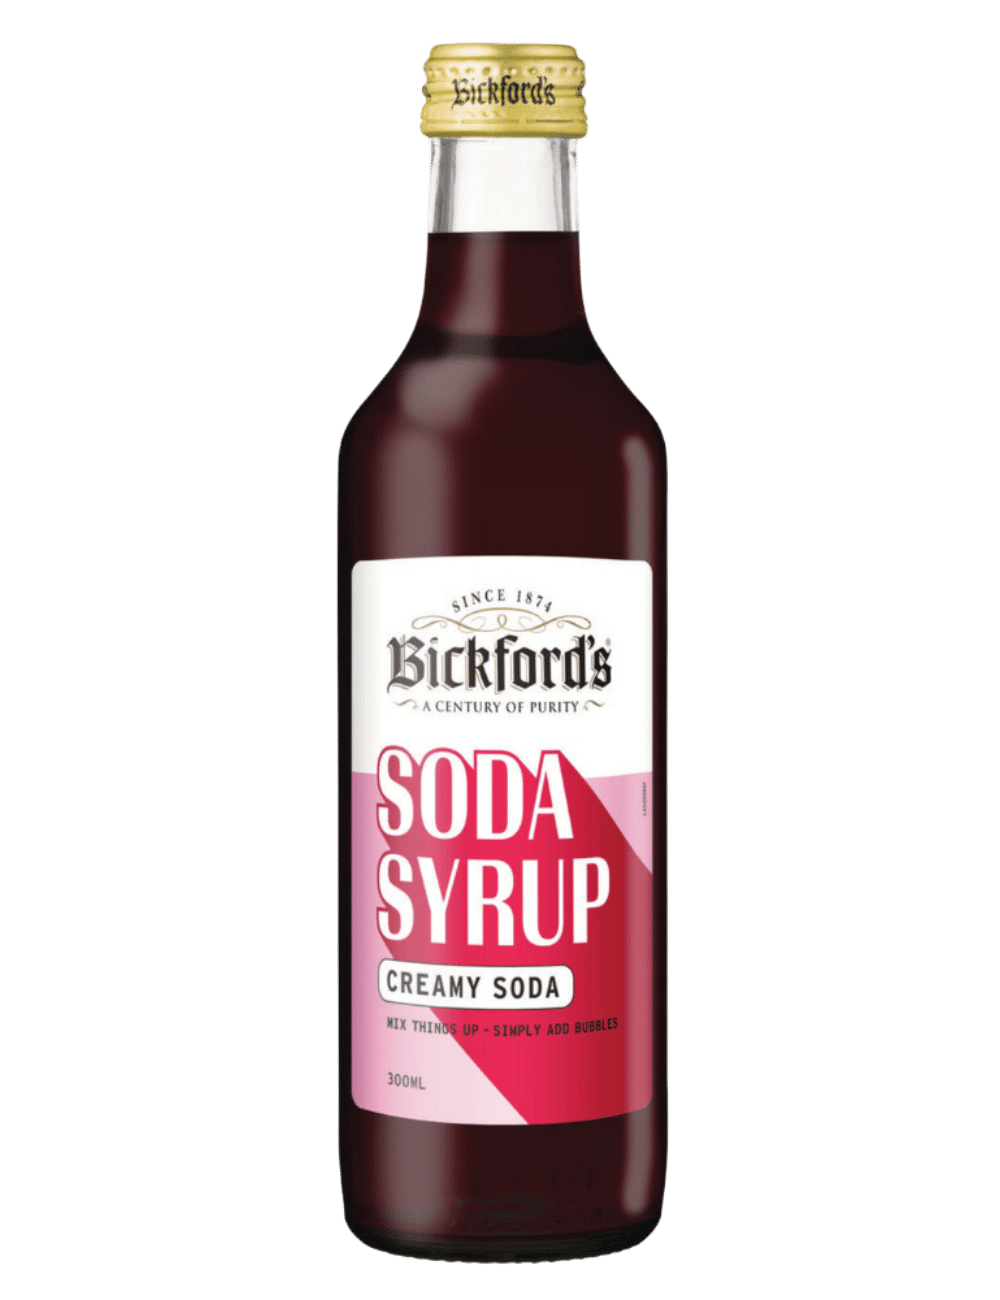 Creamy Soda Syrup